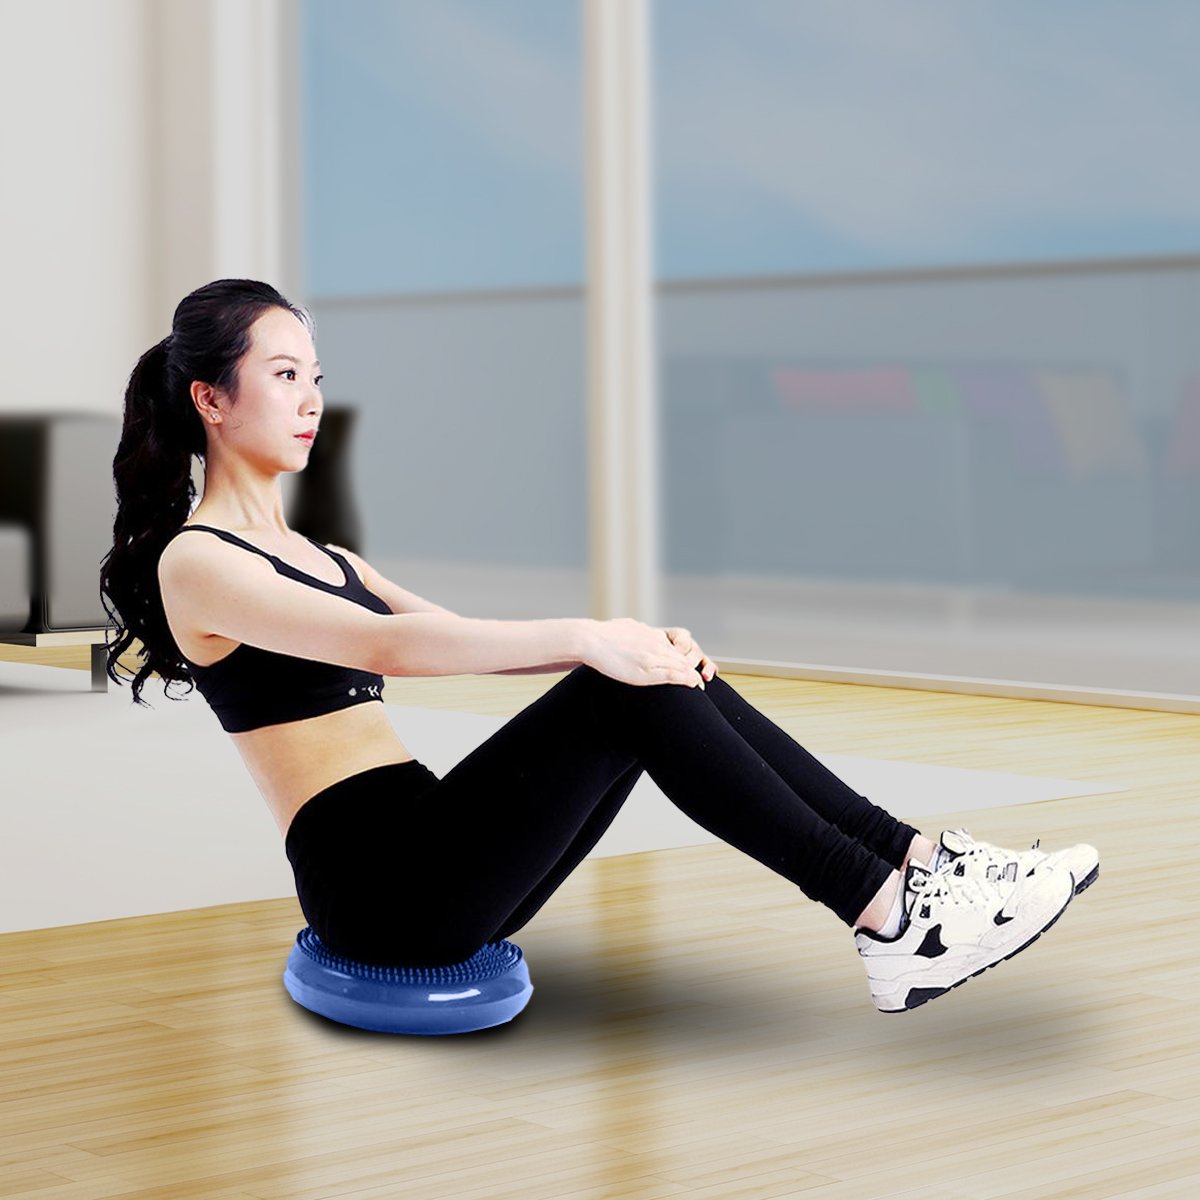 Yoga Stability Disc Home Gym Pilates Balance Trainer - Blue